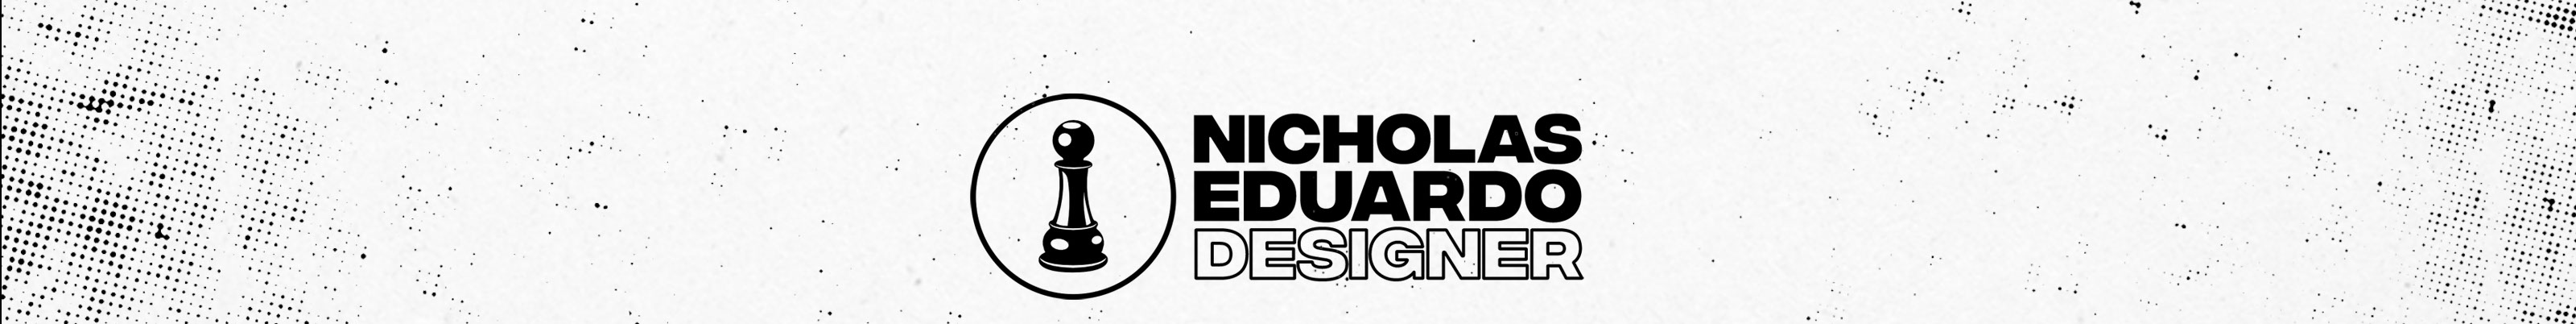 Nicholas Eduardos profilbanner